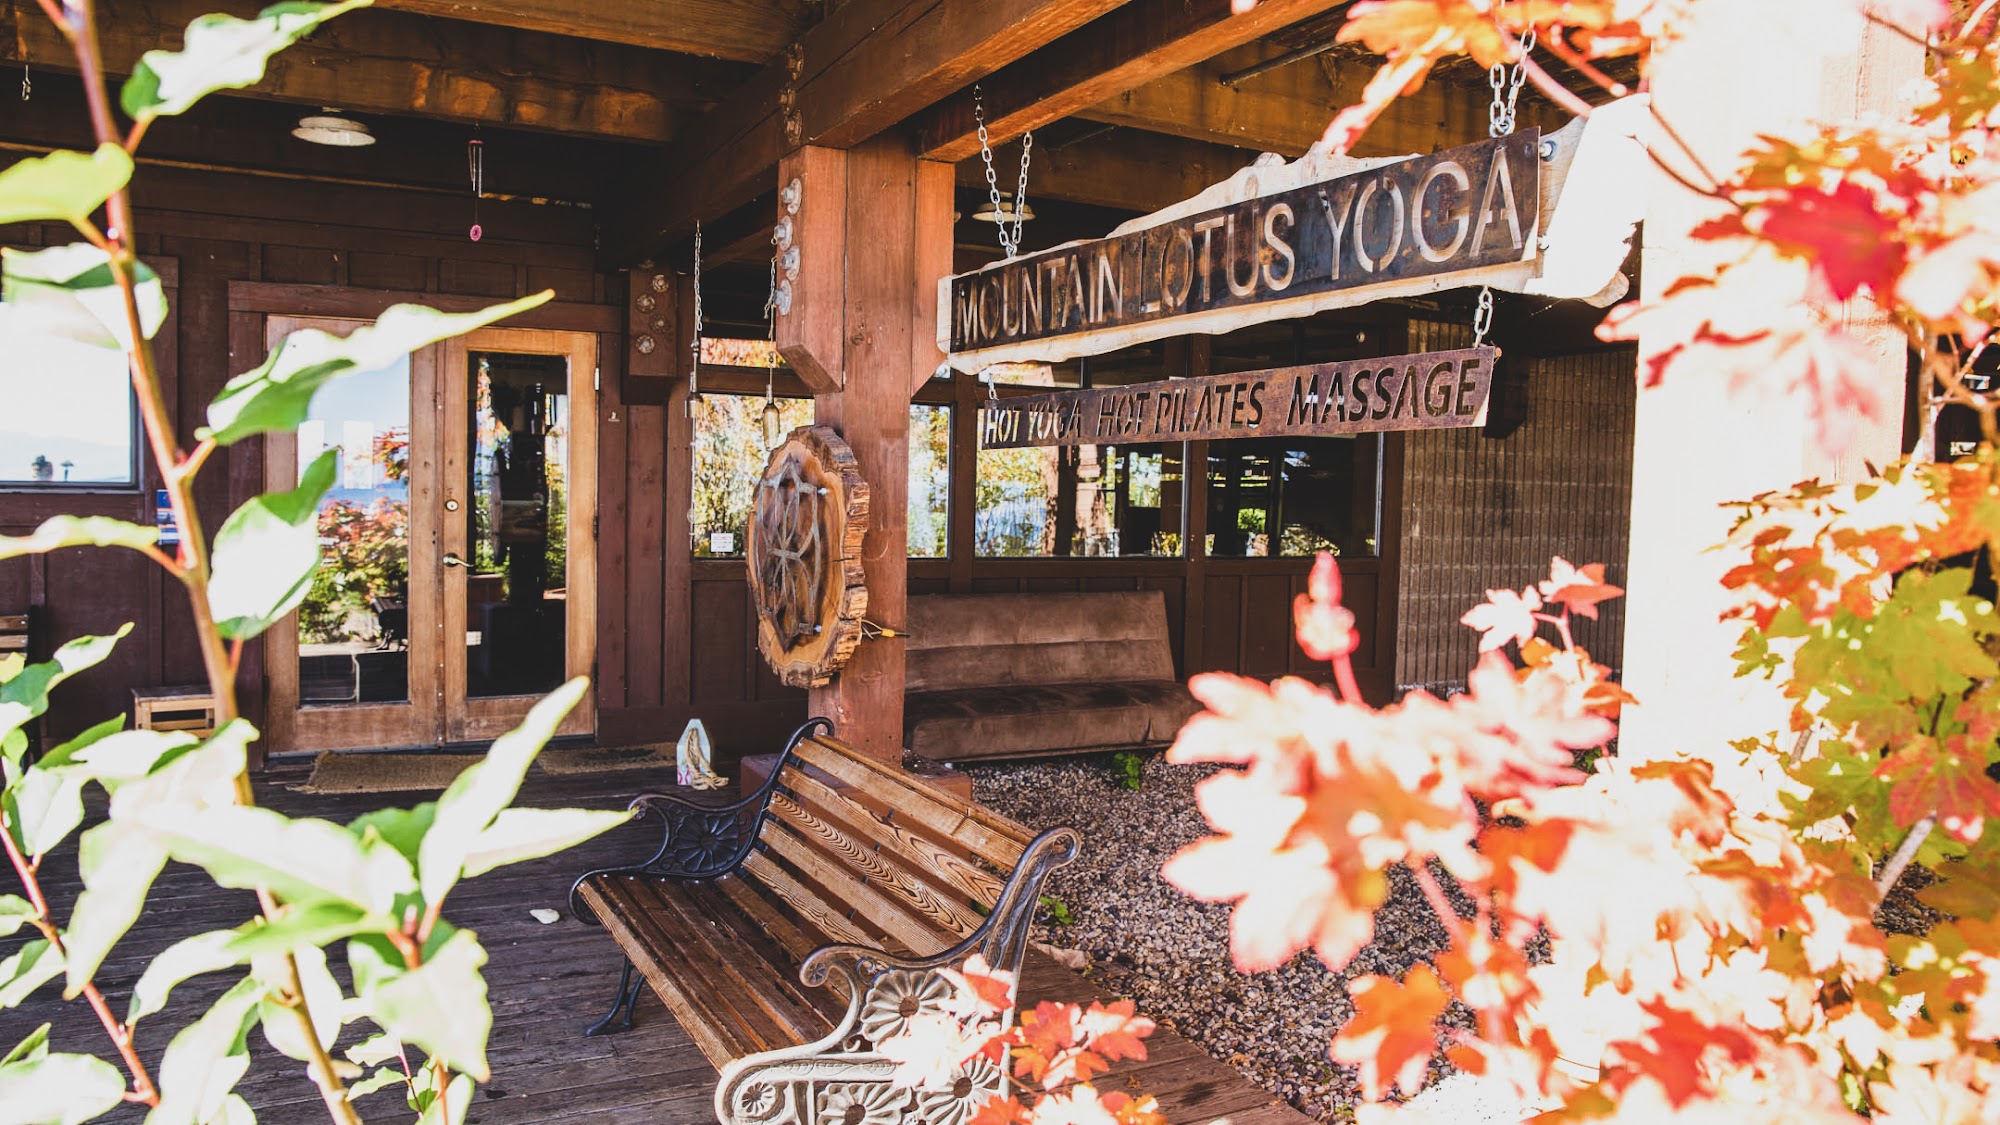 Mountain Lotus Yoga Tahoe City